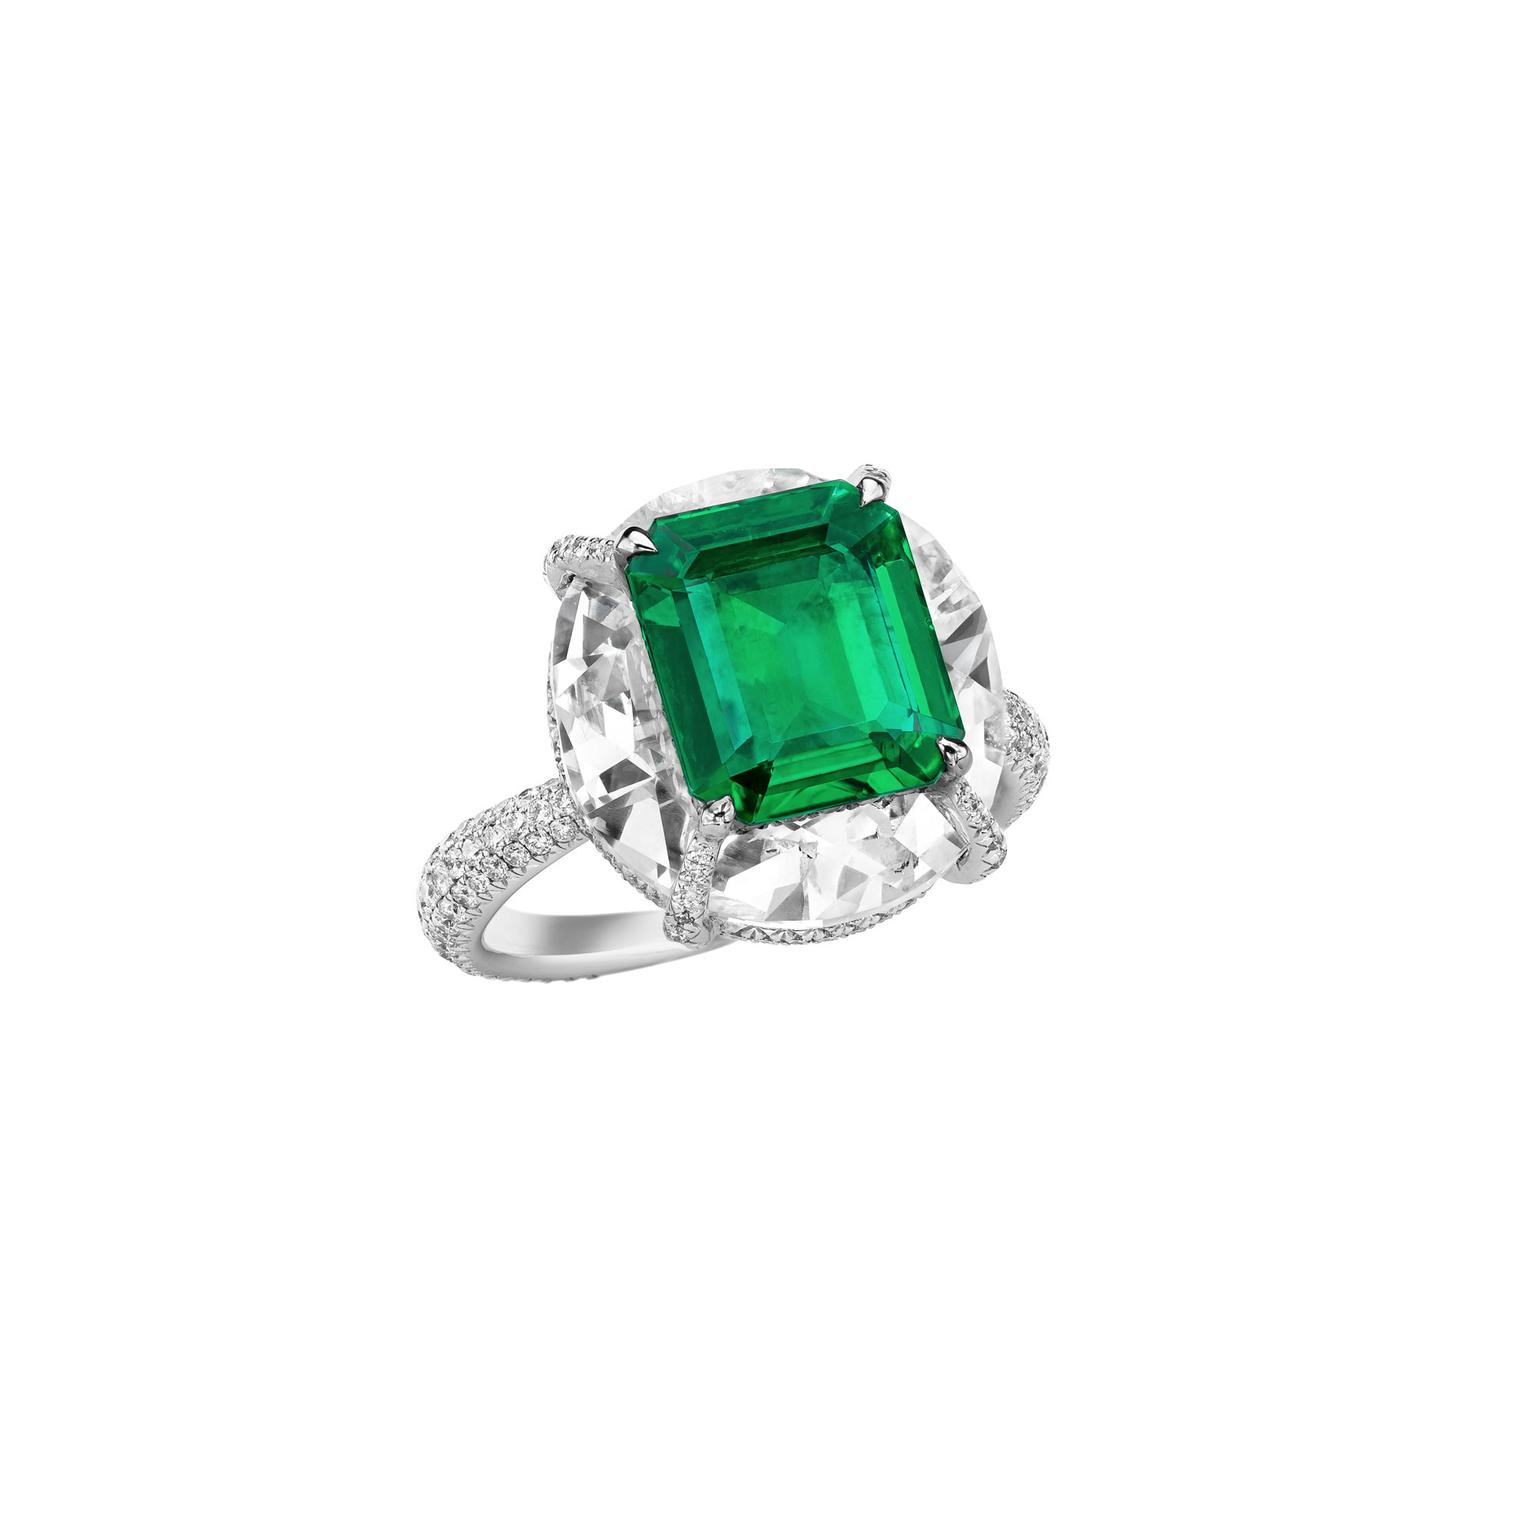 Boghossian emerald ring with diamonds